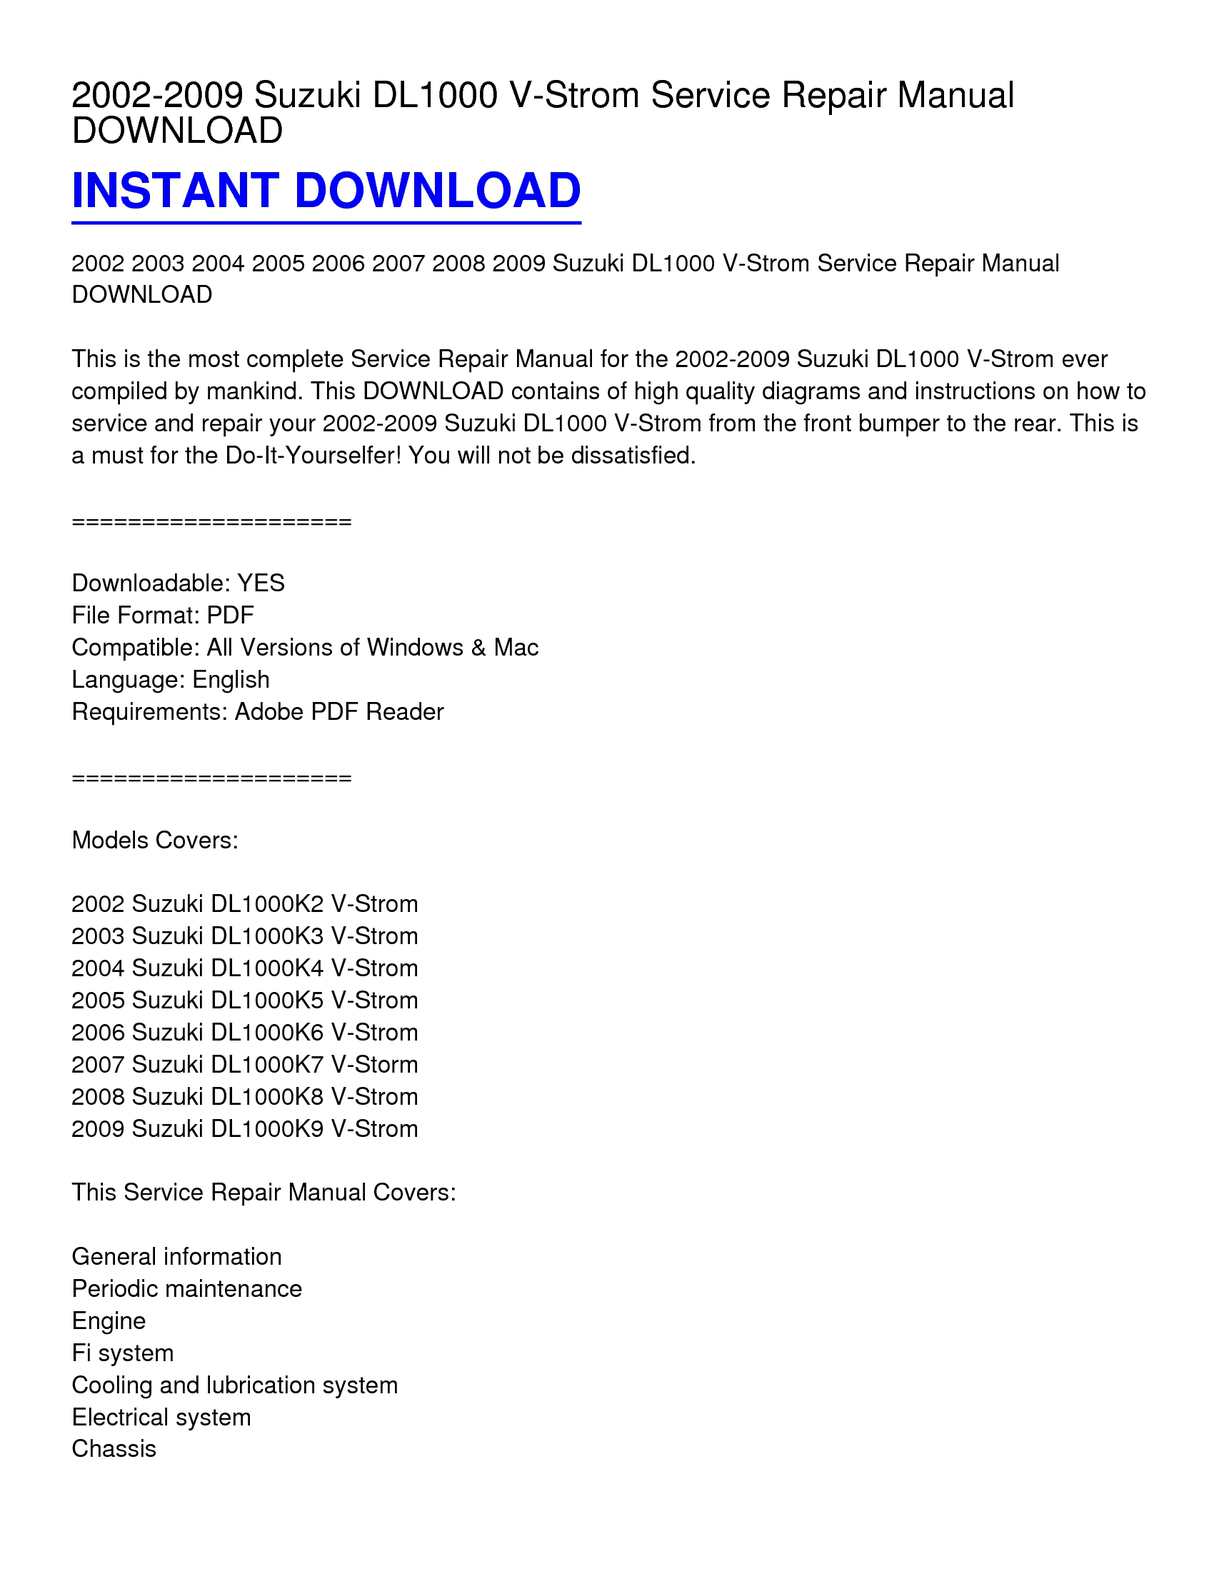 Suzuki dl1000 service manual free download